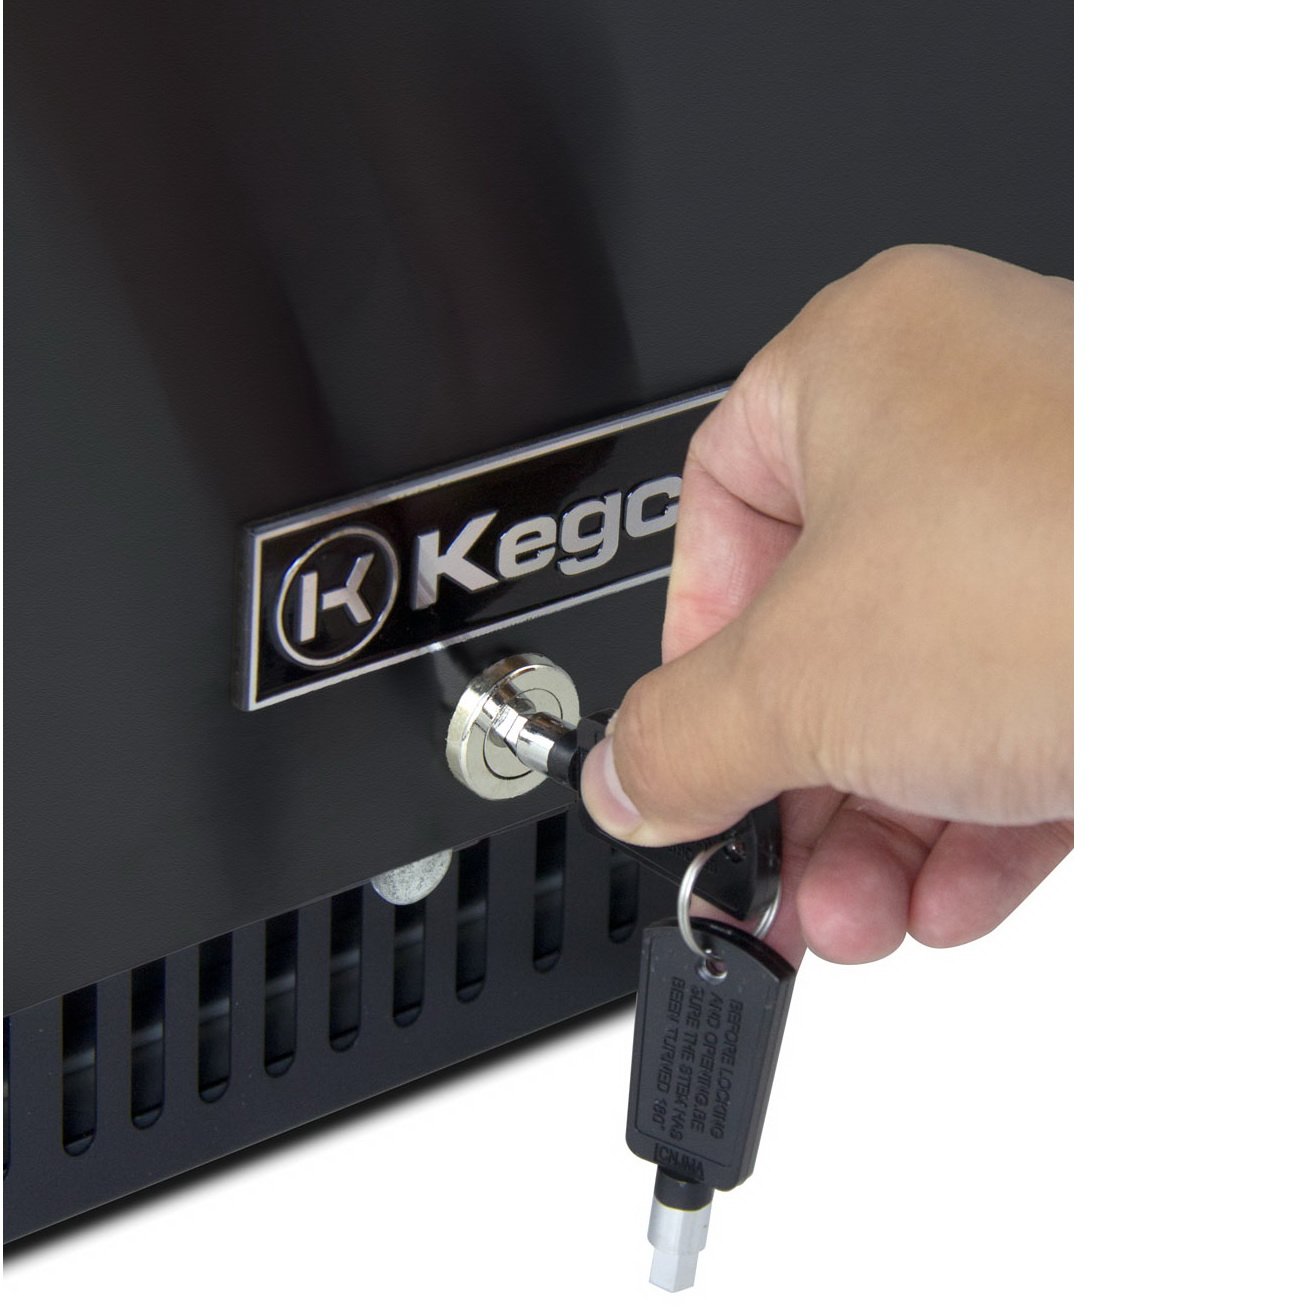 Kegco 15" Wide Commercial Home Brew Kegerator with Black Door